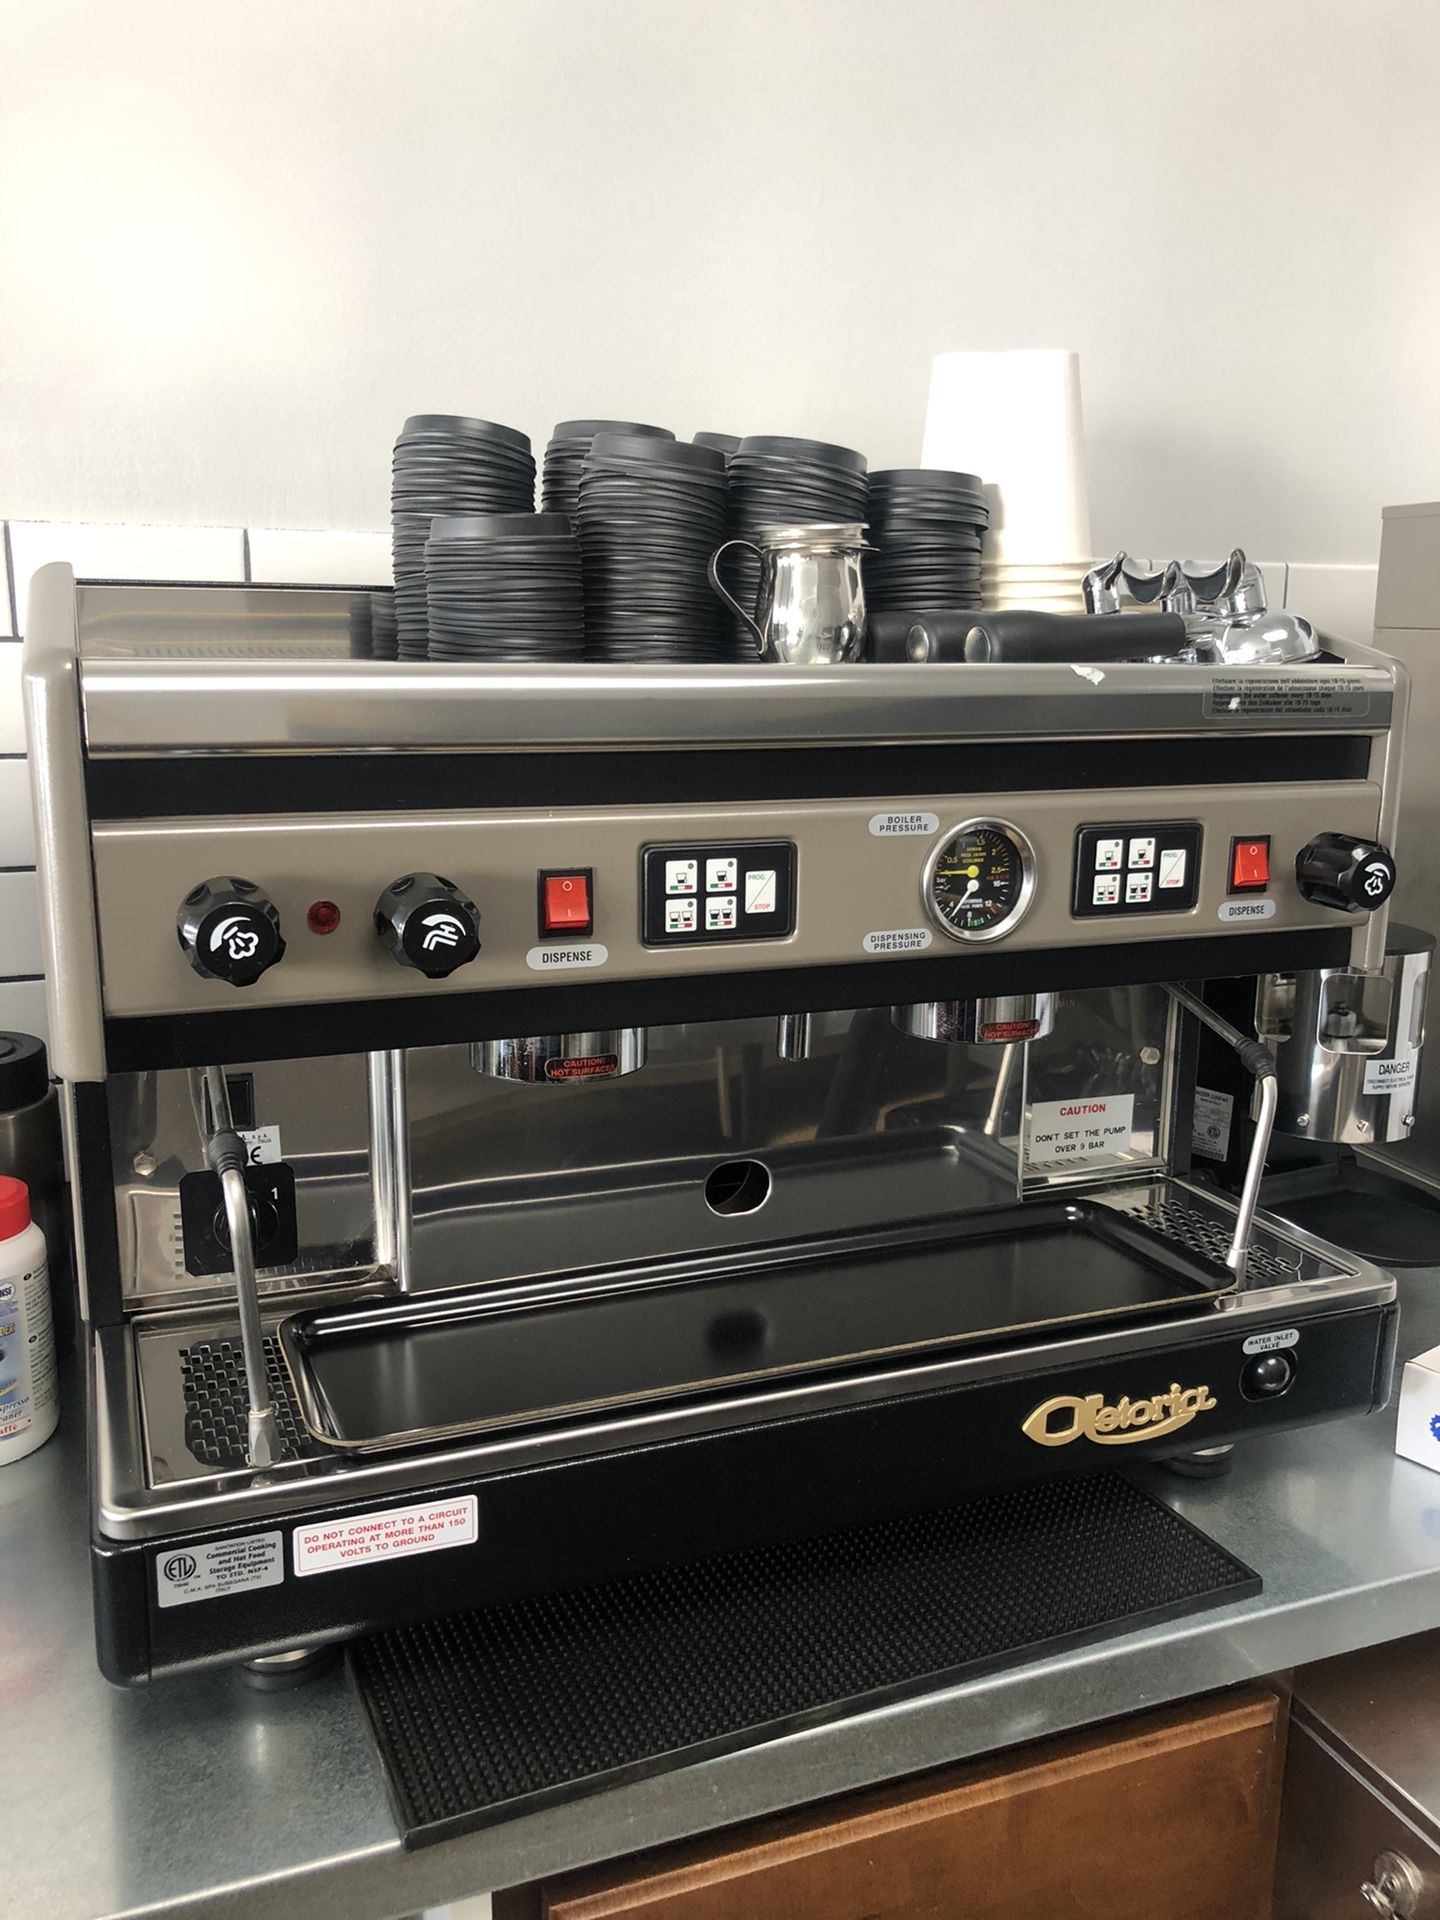 Commercial Sized Espresso Machine